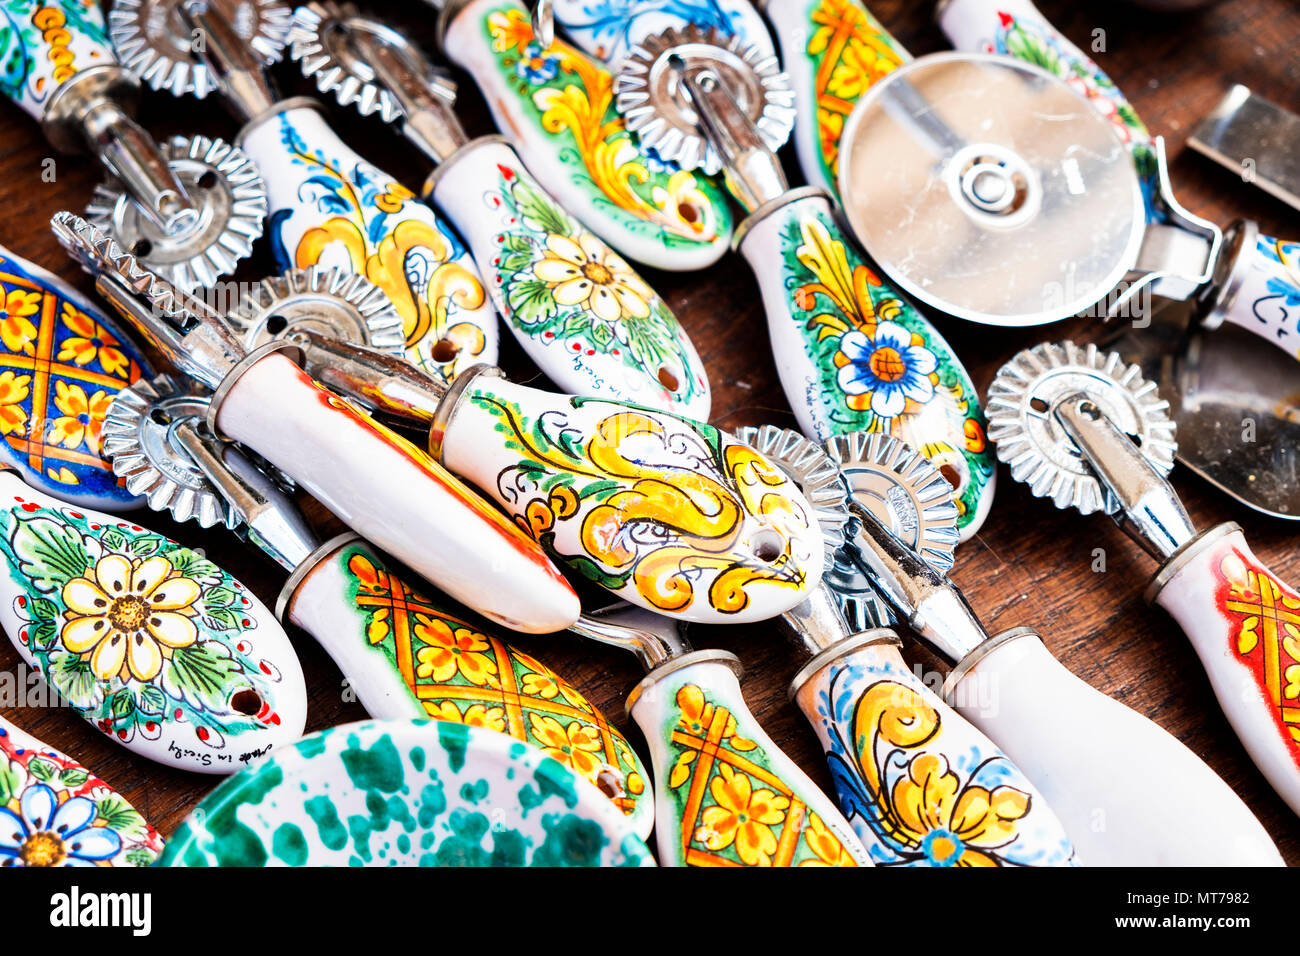 decorated ceramic kitchen utensils Stock Photo